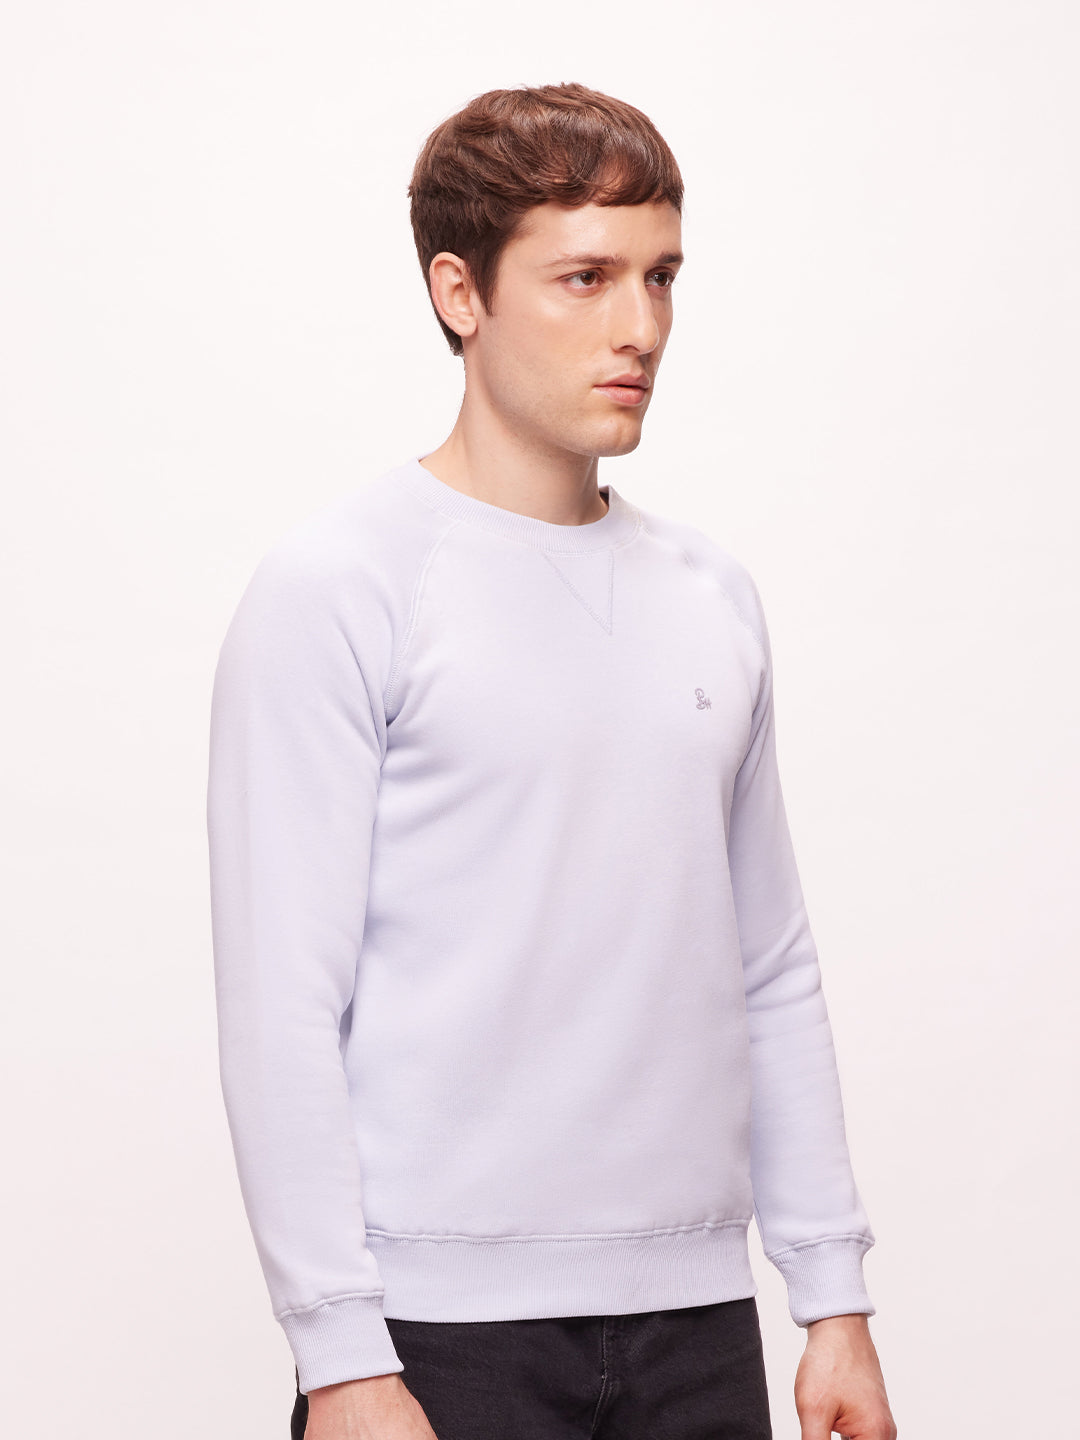 Bombay High Men's Premium Cotton Blend Solid Sweatshirt